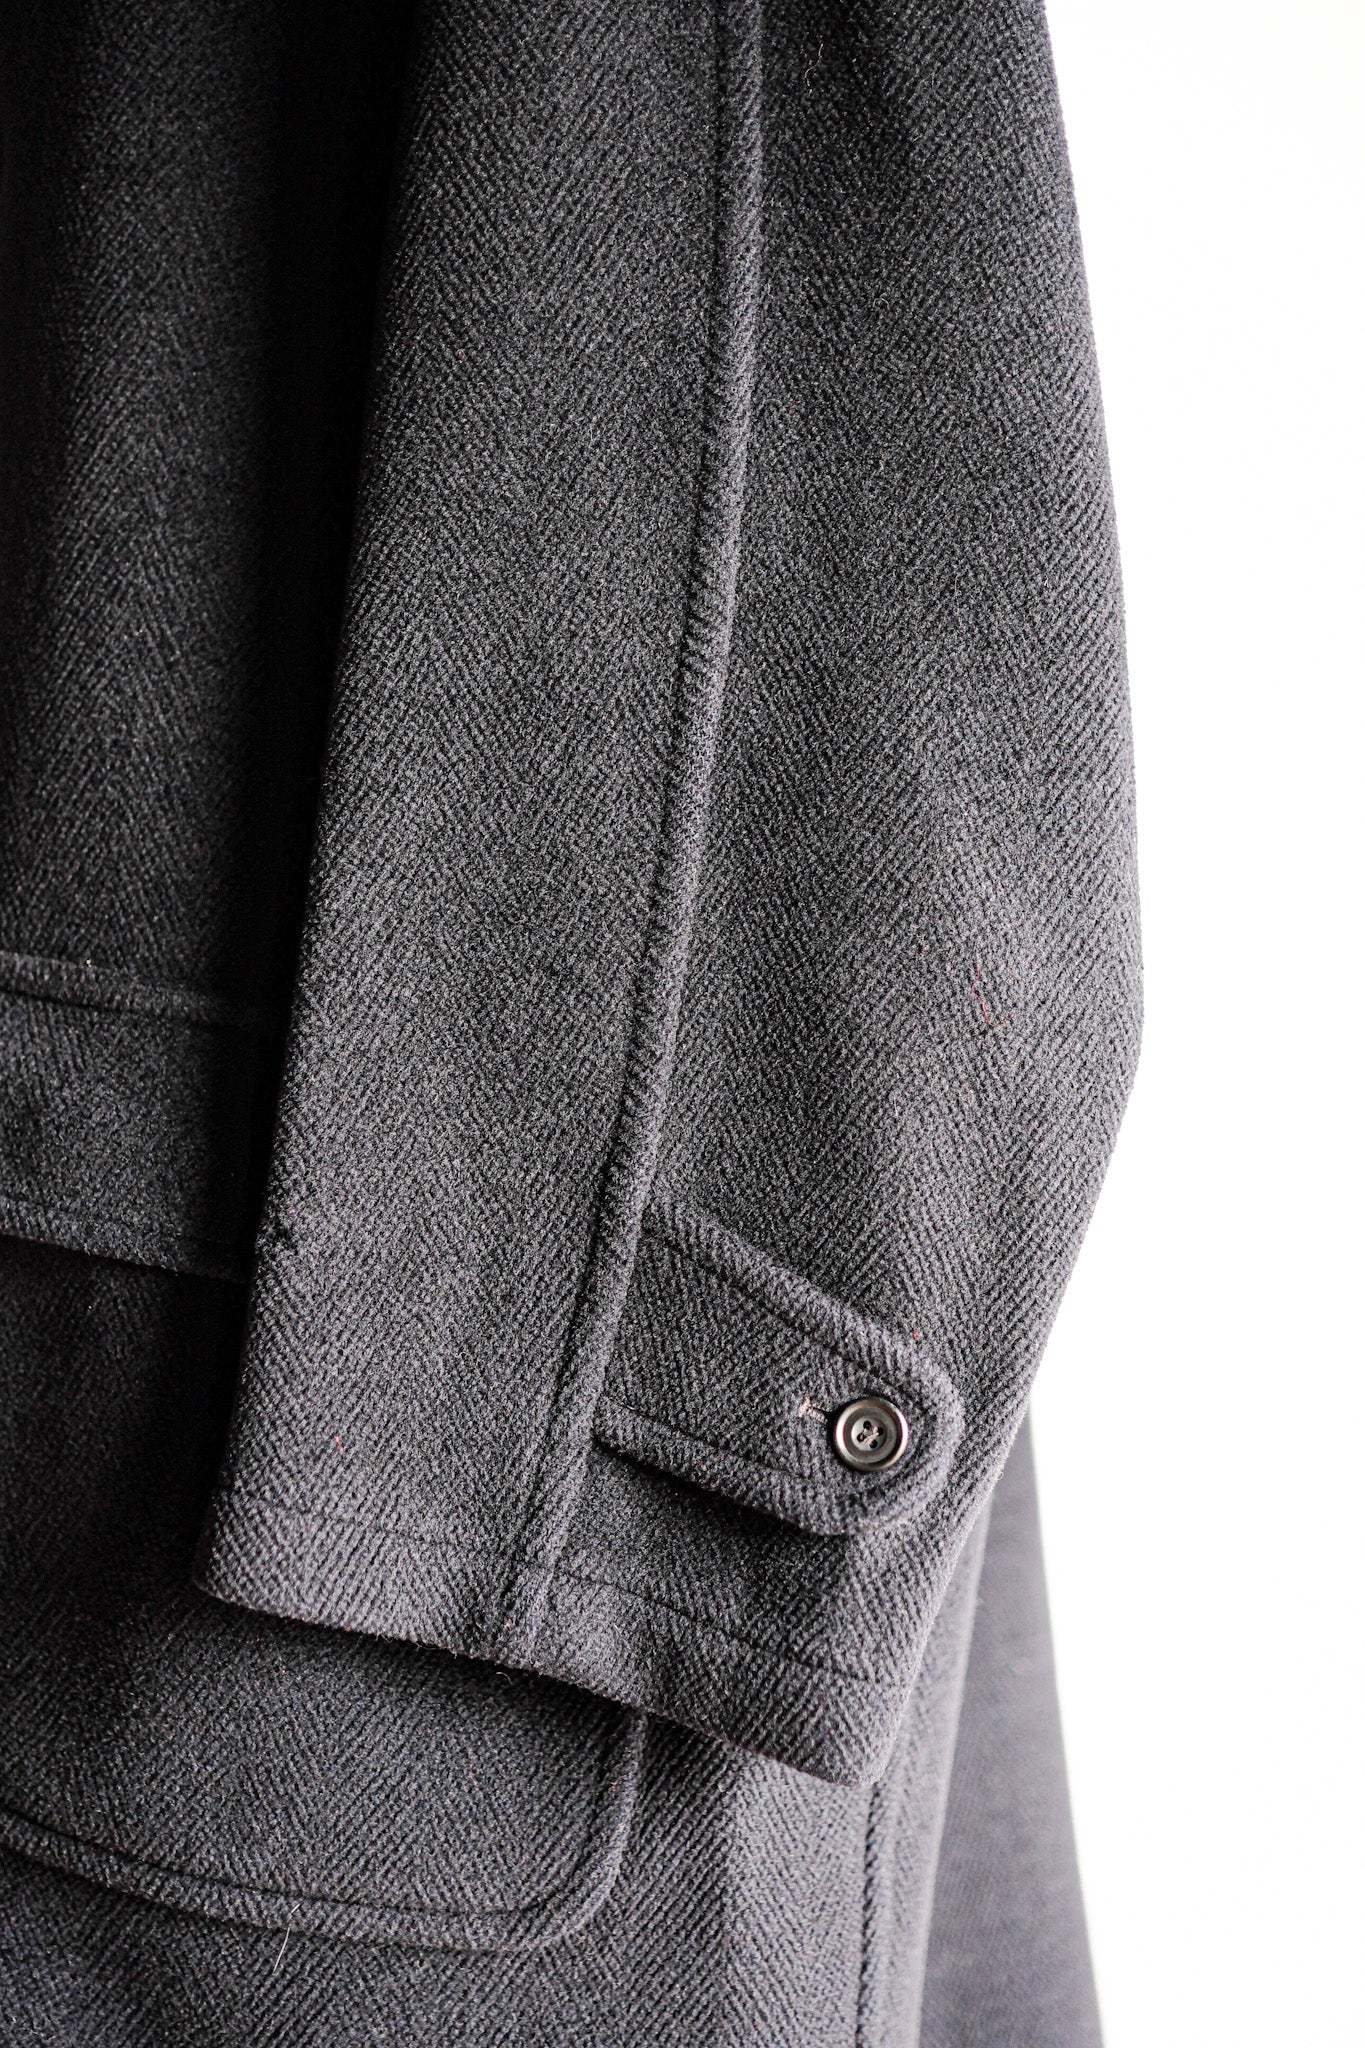 【~80’s】Vintage Grenfell Wool Duffle Coat Size.44 "Moorbrook"